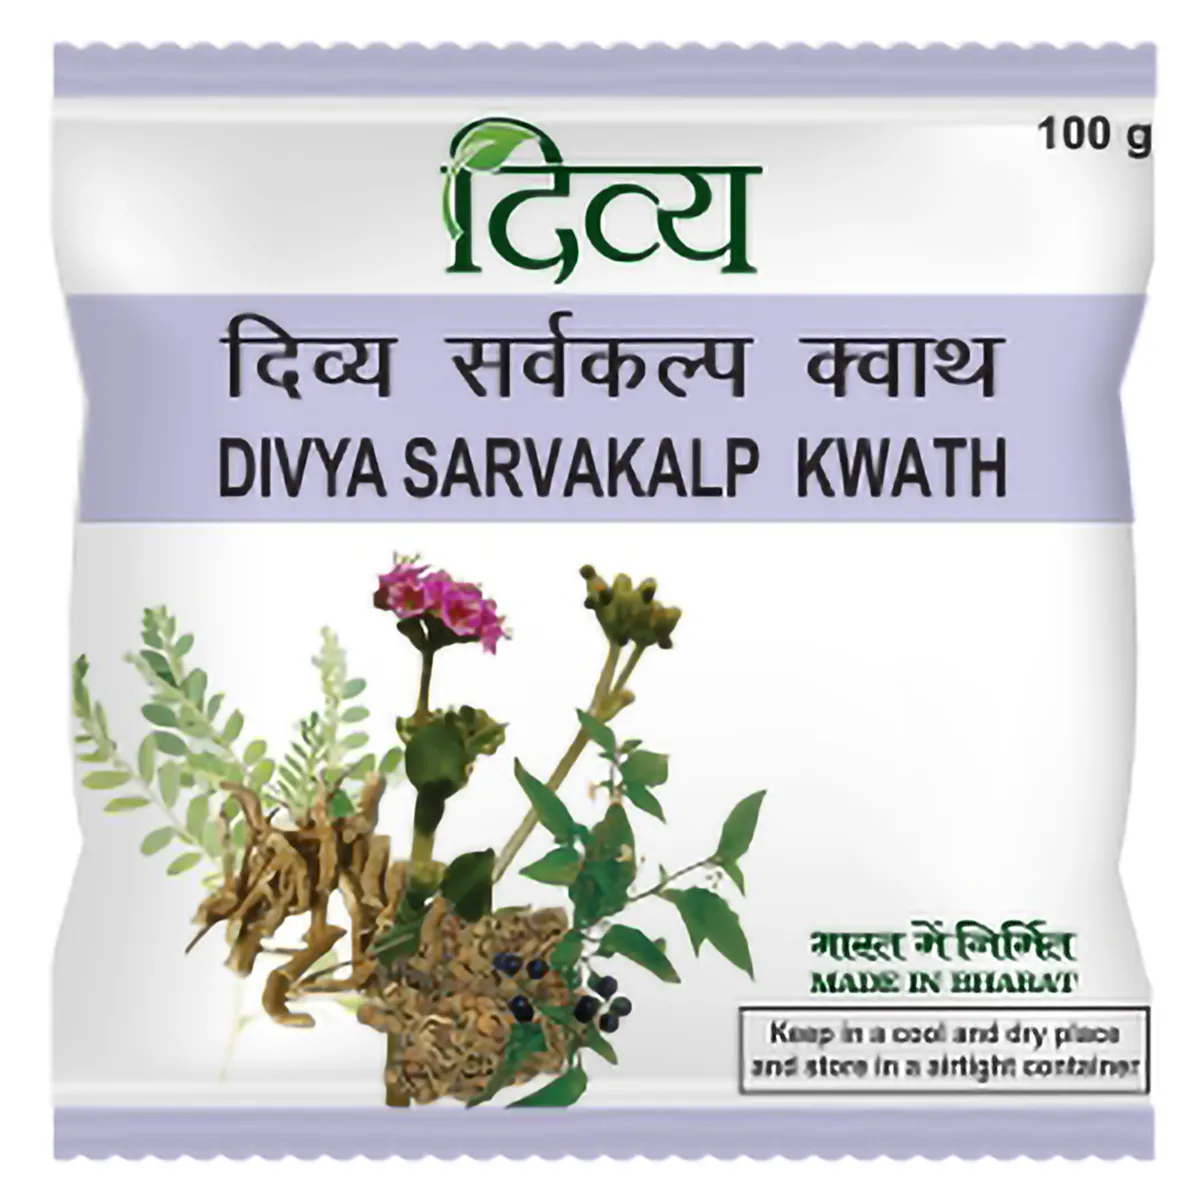 Link Samahan 100% Natural Herbal Drink (5 Sachets) - Each of 4 gm - Online  Shopping in Nepal, Shringar Store, Shringar Shop, Cosmetics Store, Cosmetics Shop